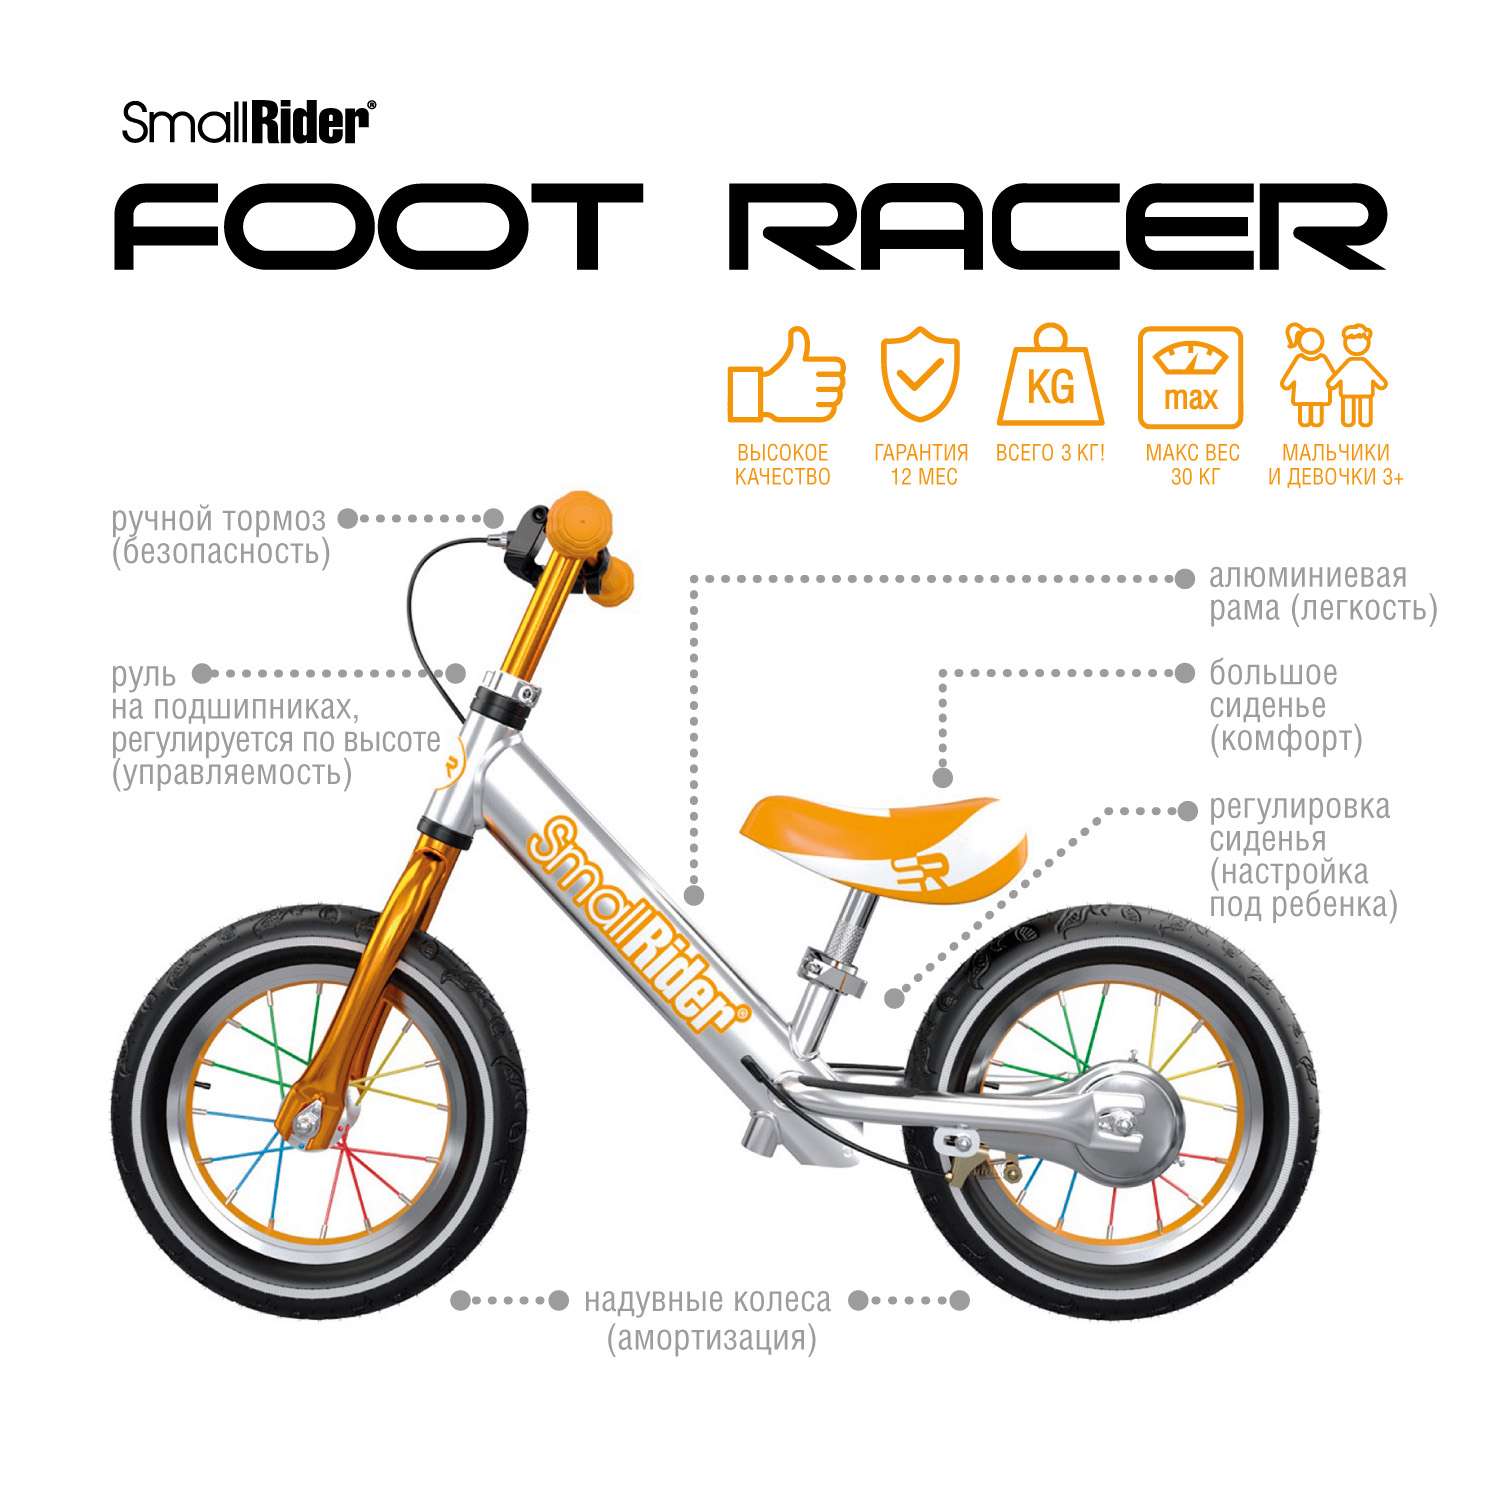 Беговел Small Rider Foot Racer 3 Air серебро-бронзовый - фото 2